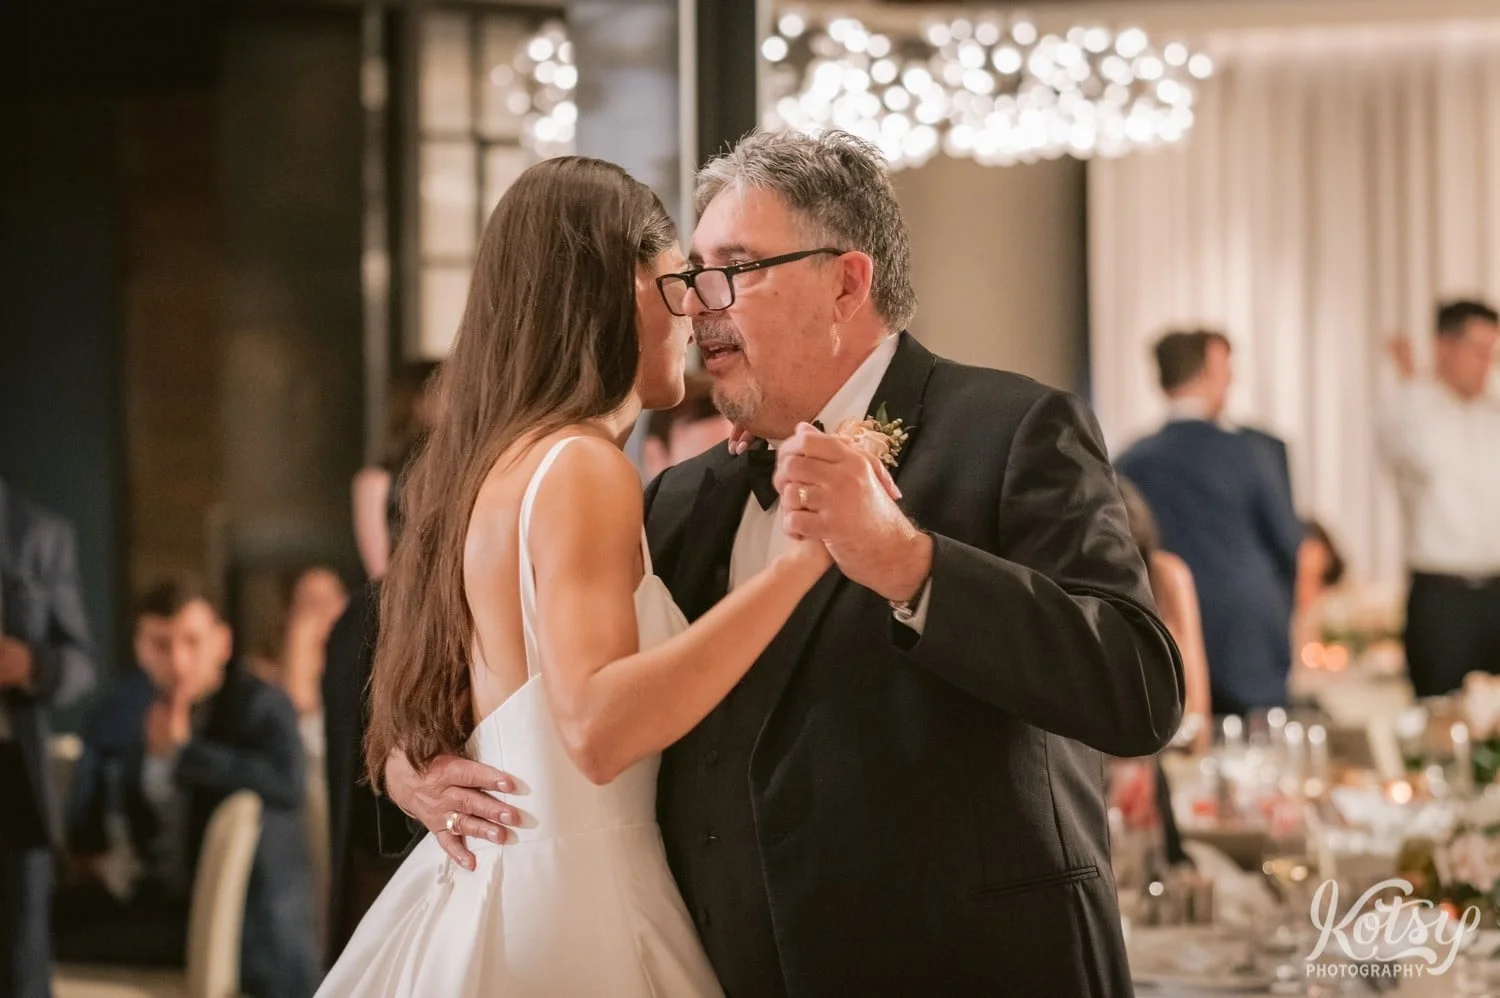 An elderly man dances with his daughter during her Village Loft wedding reception in Toronto, Canada